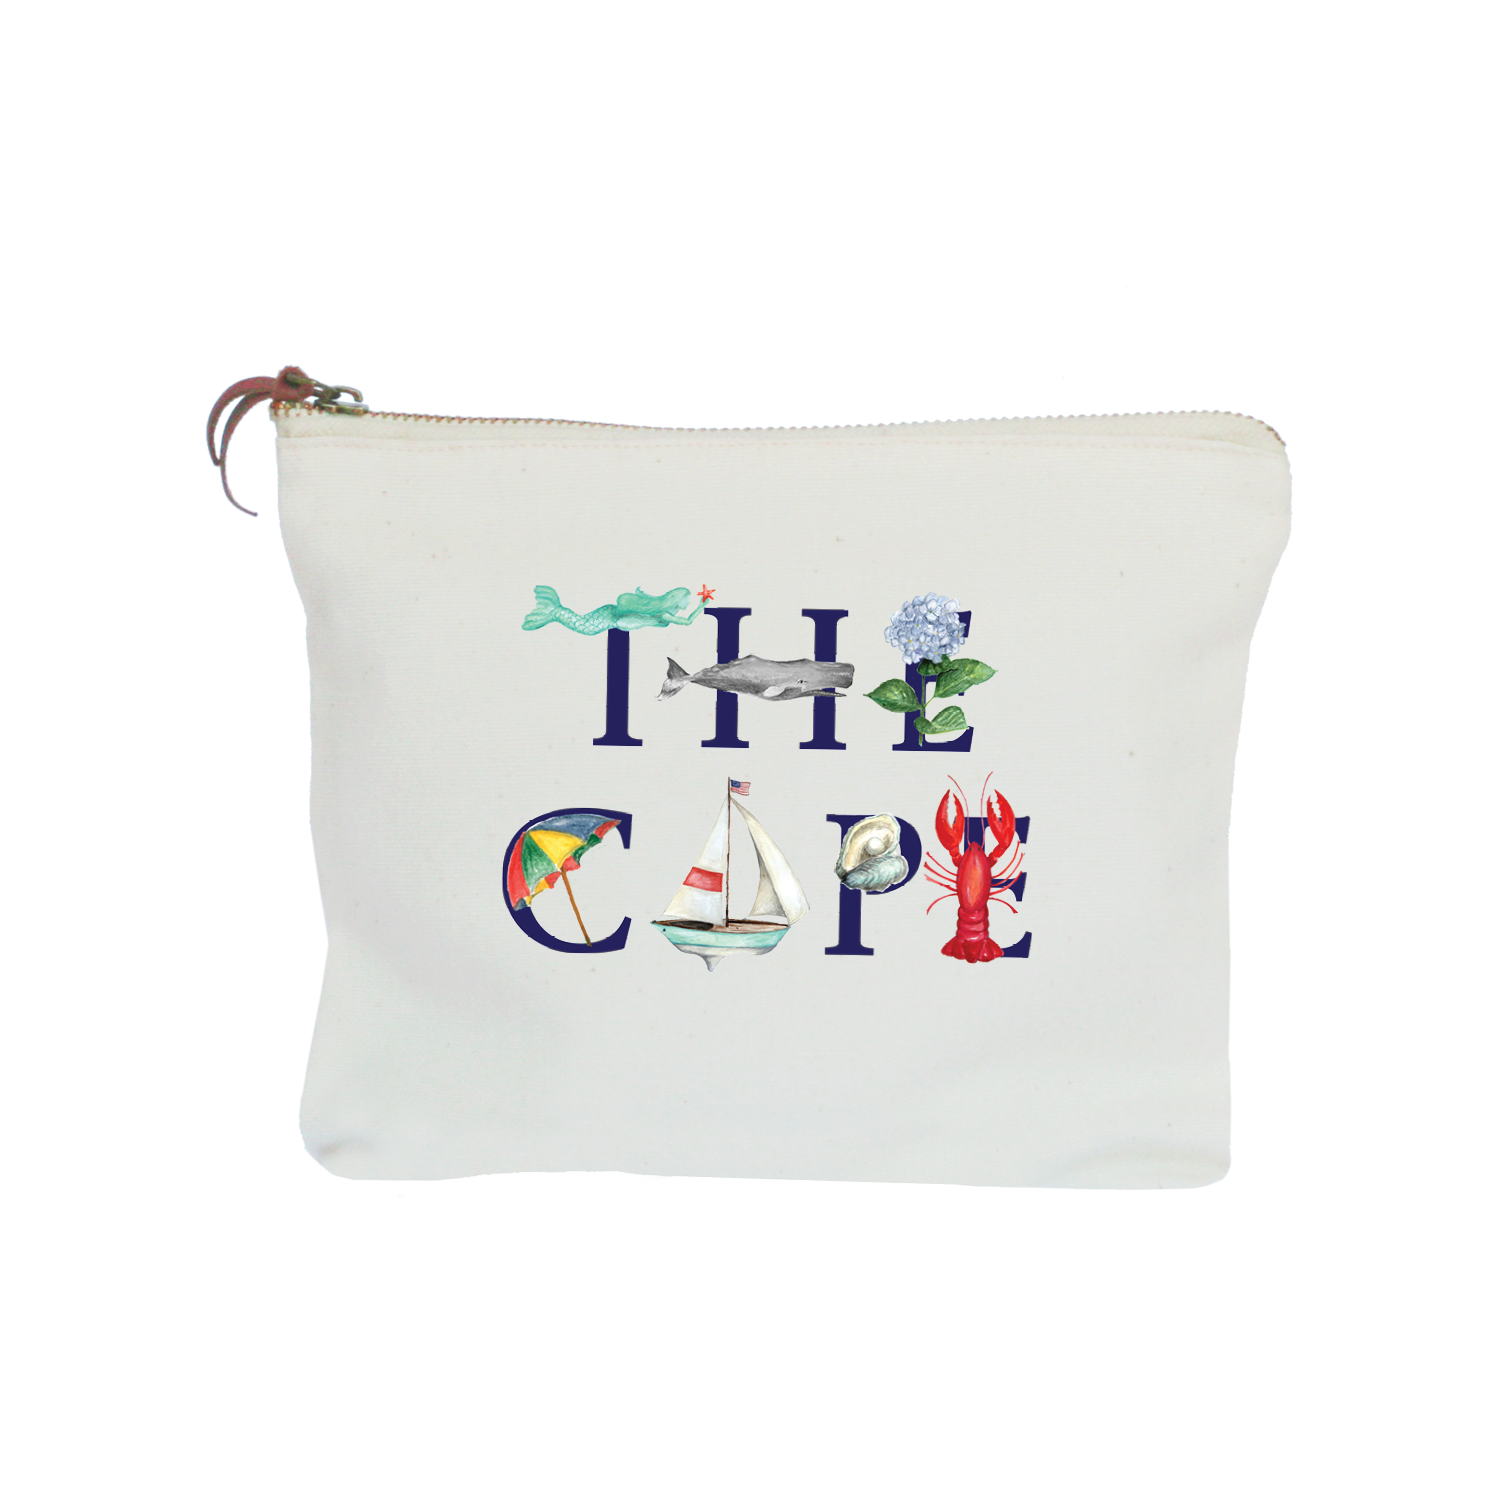 the cape zipper pouch